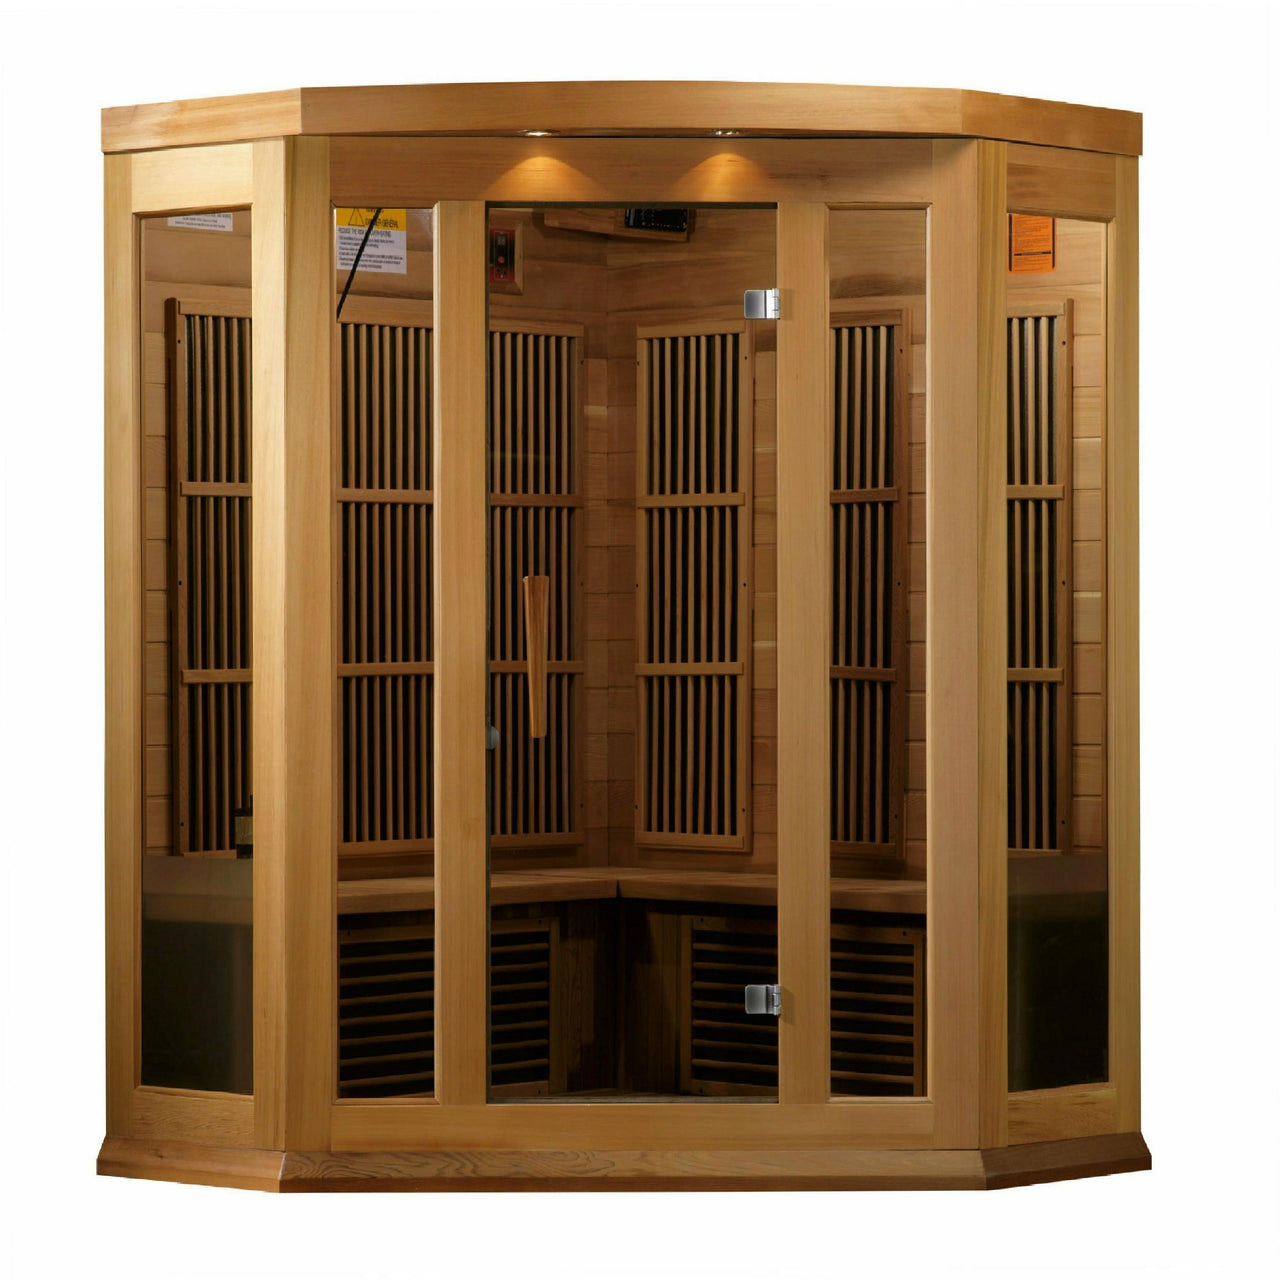 Golden Designs Sauna: Maxxus "Chaumont Edition" 3 Person Corner Near Zero EMF FAR Infrared Carbon - Canadian Red Cedar - MK-K356-01-ZF CED - Fire Pit Stock